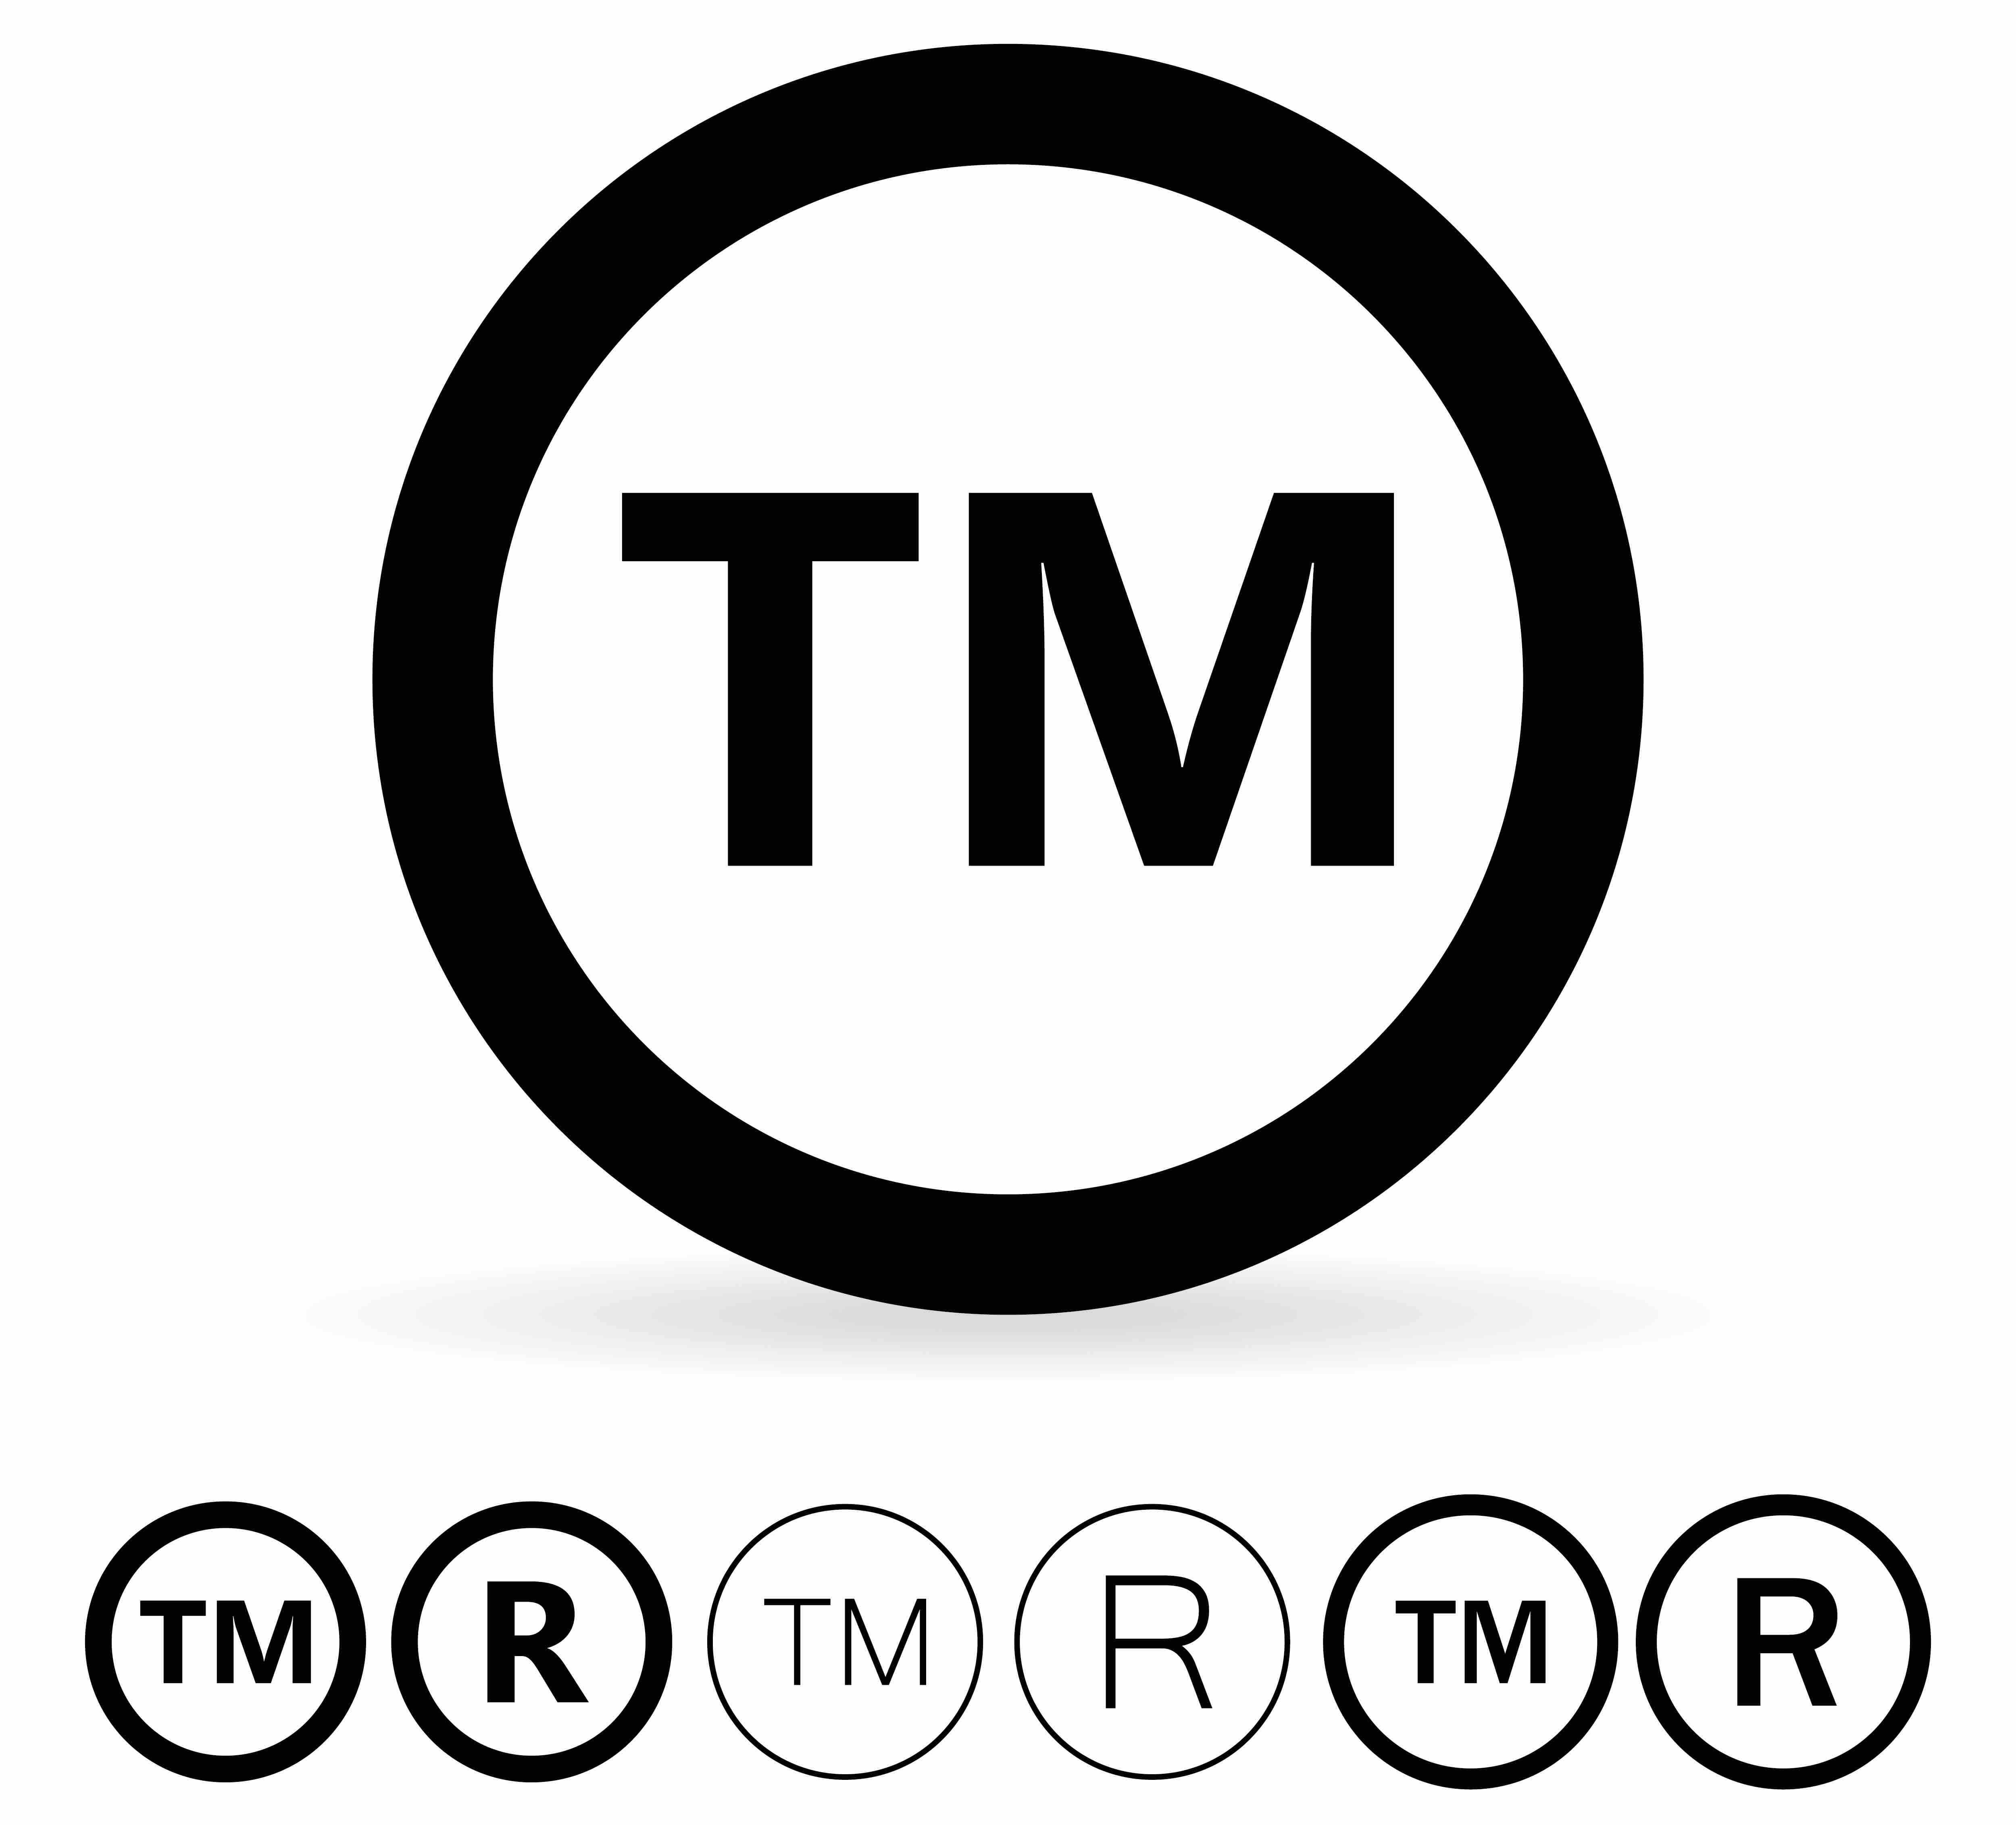 Registered Trademark Logo - How to use trademark and registered trademark symbols - Cooper Mills